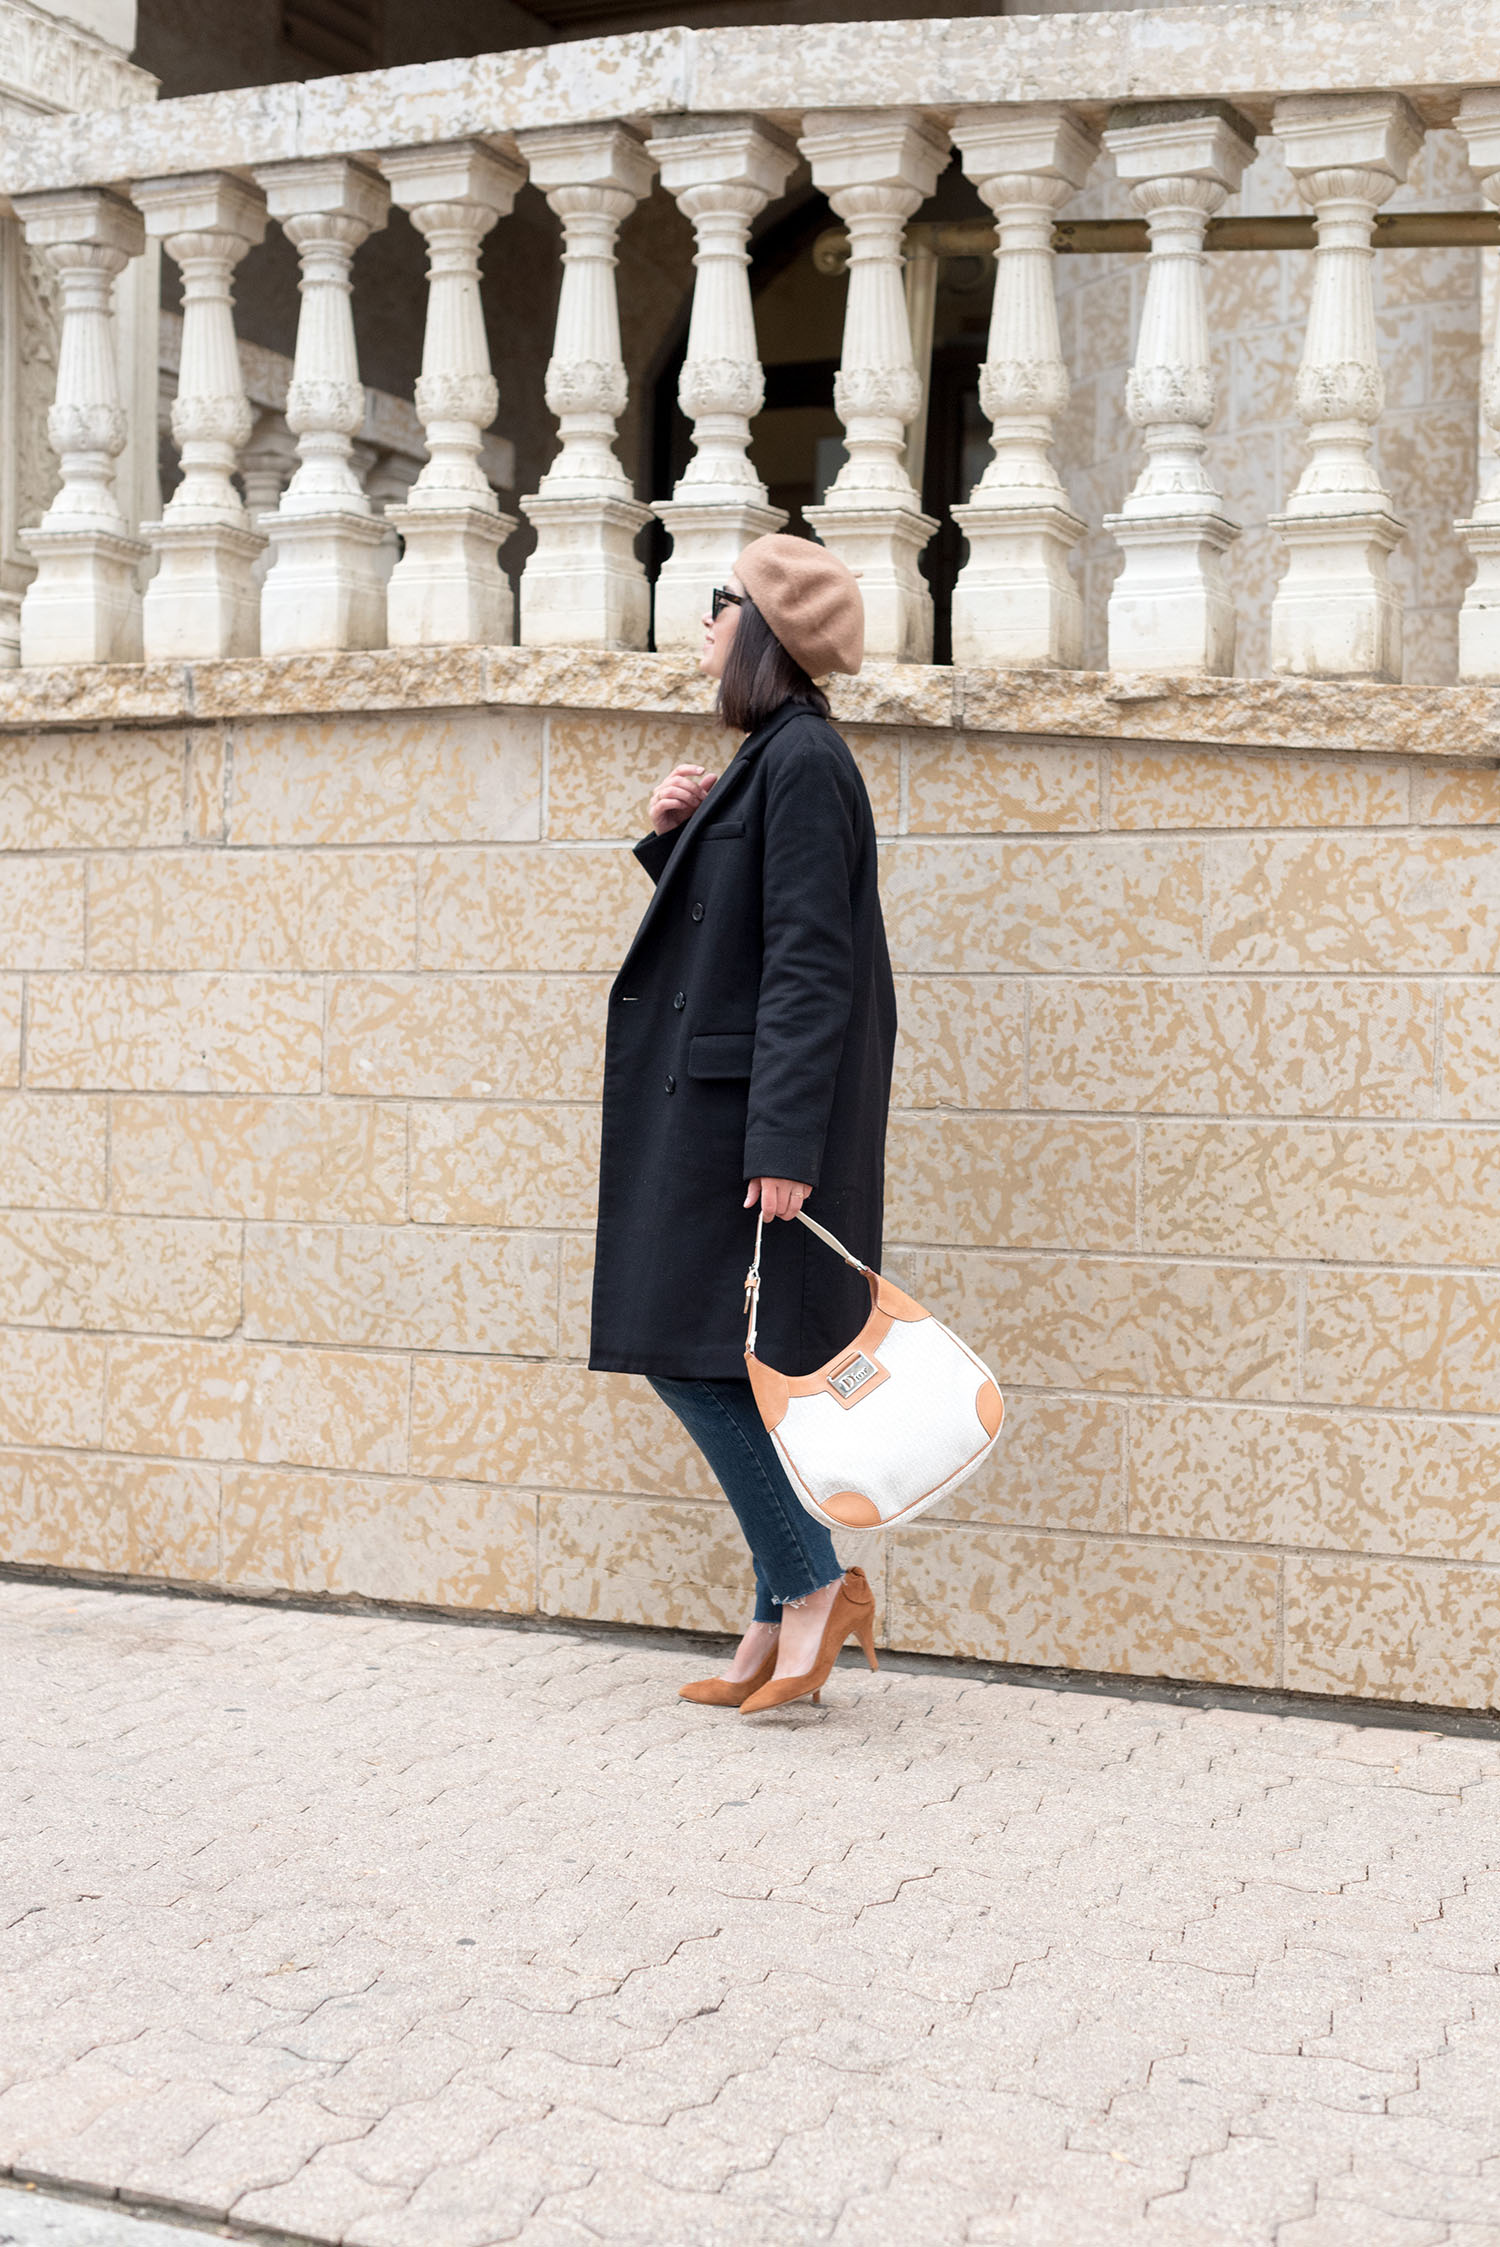 Top Winnipeg fashion blogger Cee Fardoe of Coco & Vera wears a black Aritzia coat and carries a vintage Dior handbag